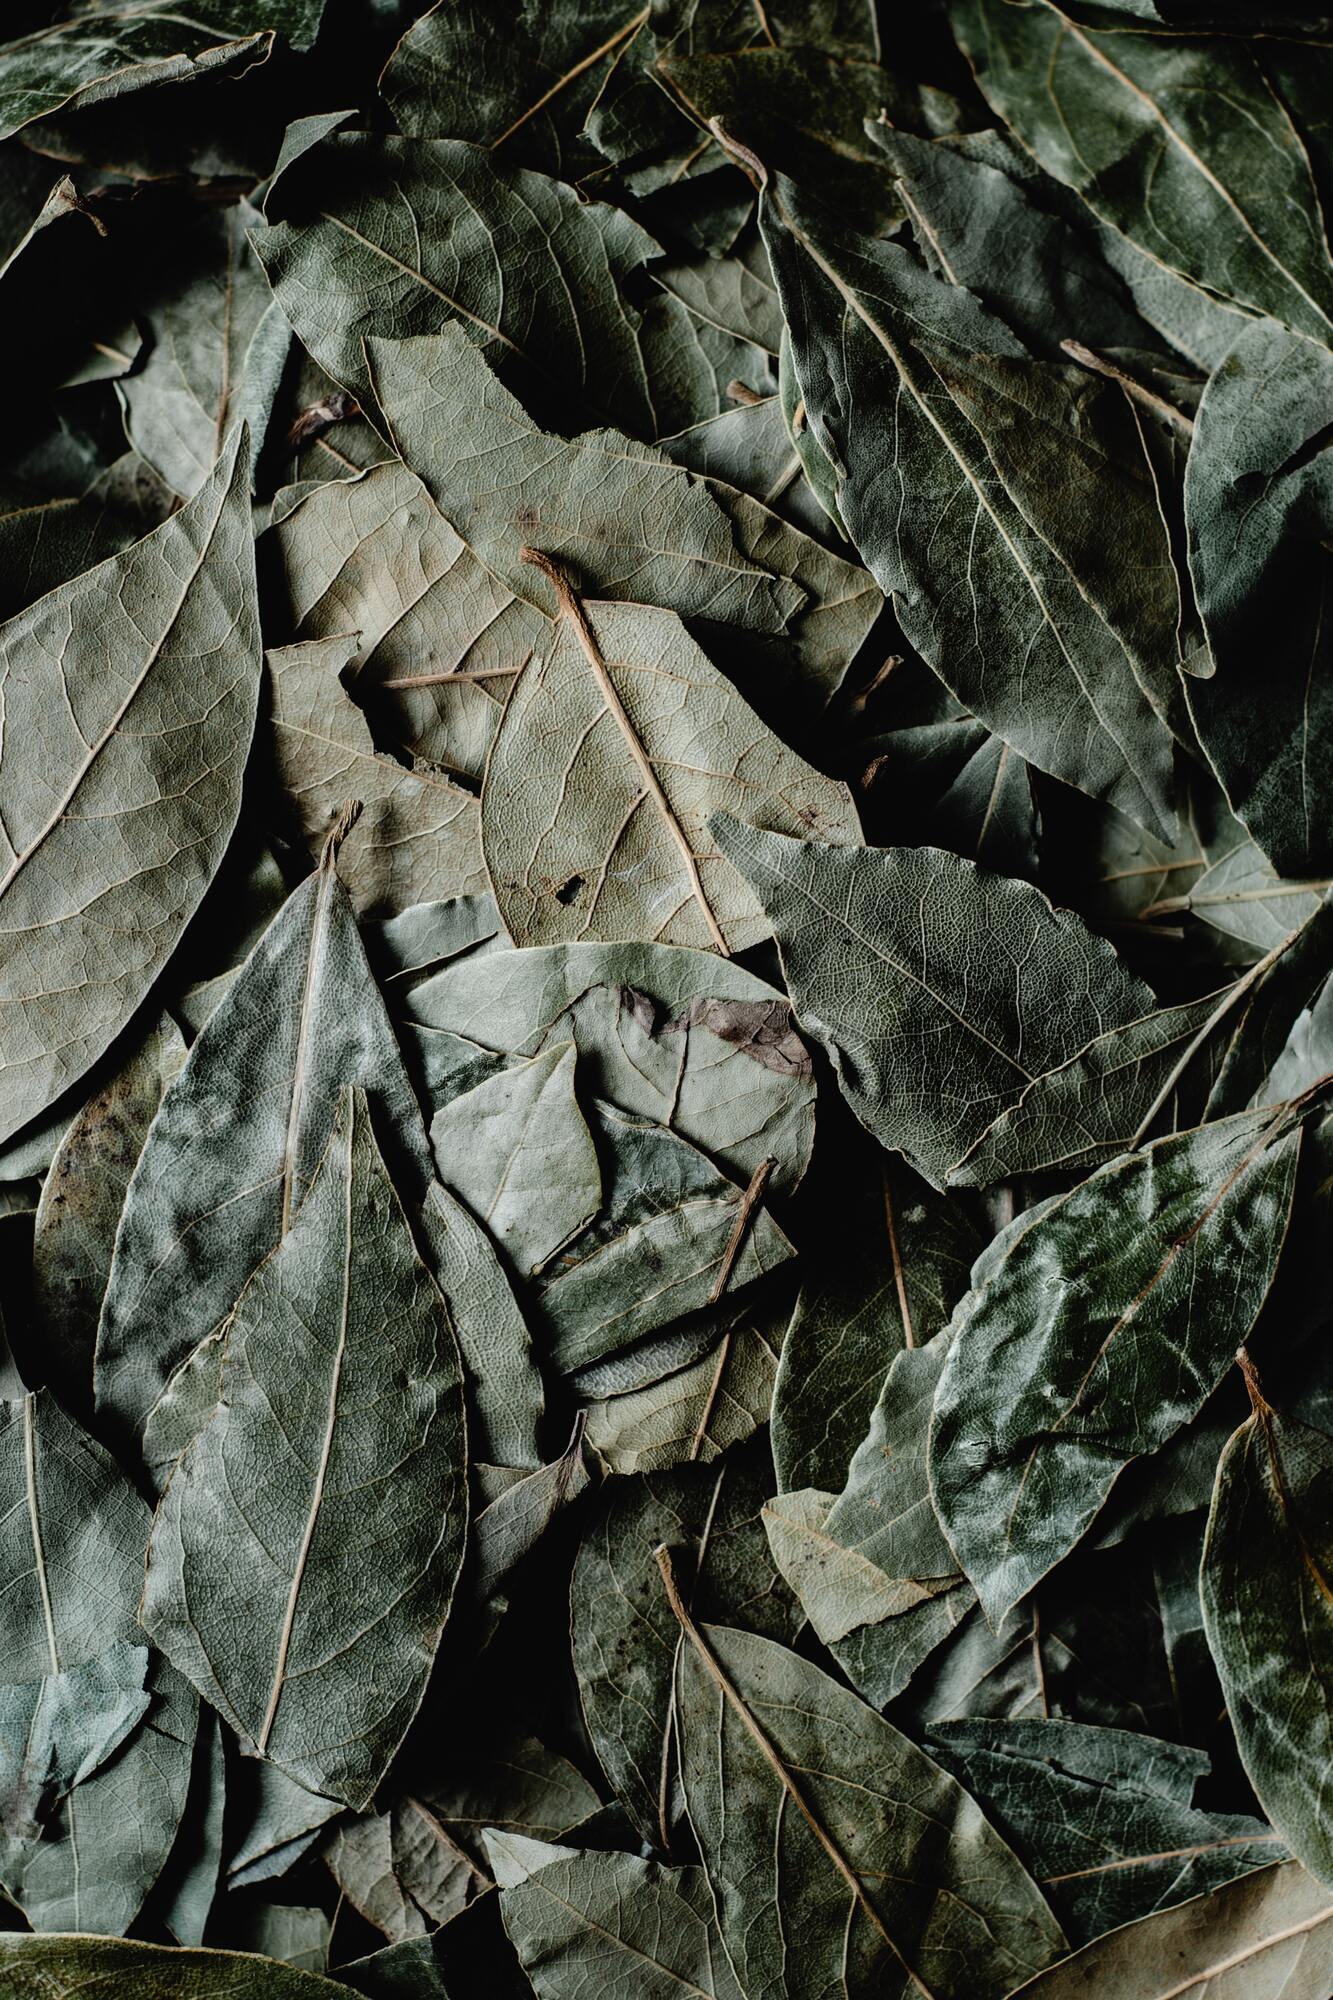 Dried bay leaves